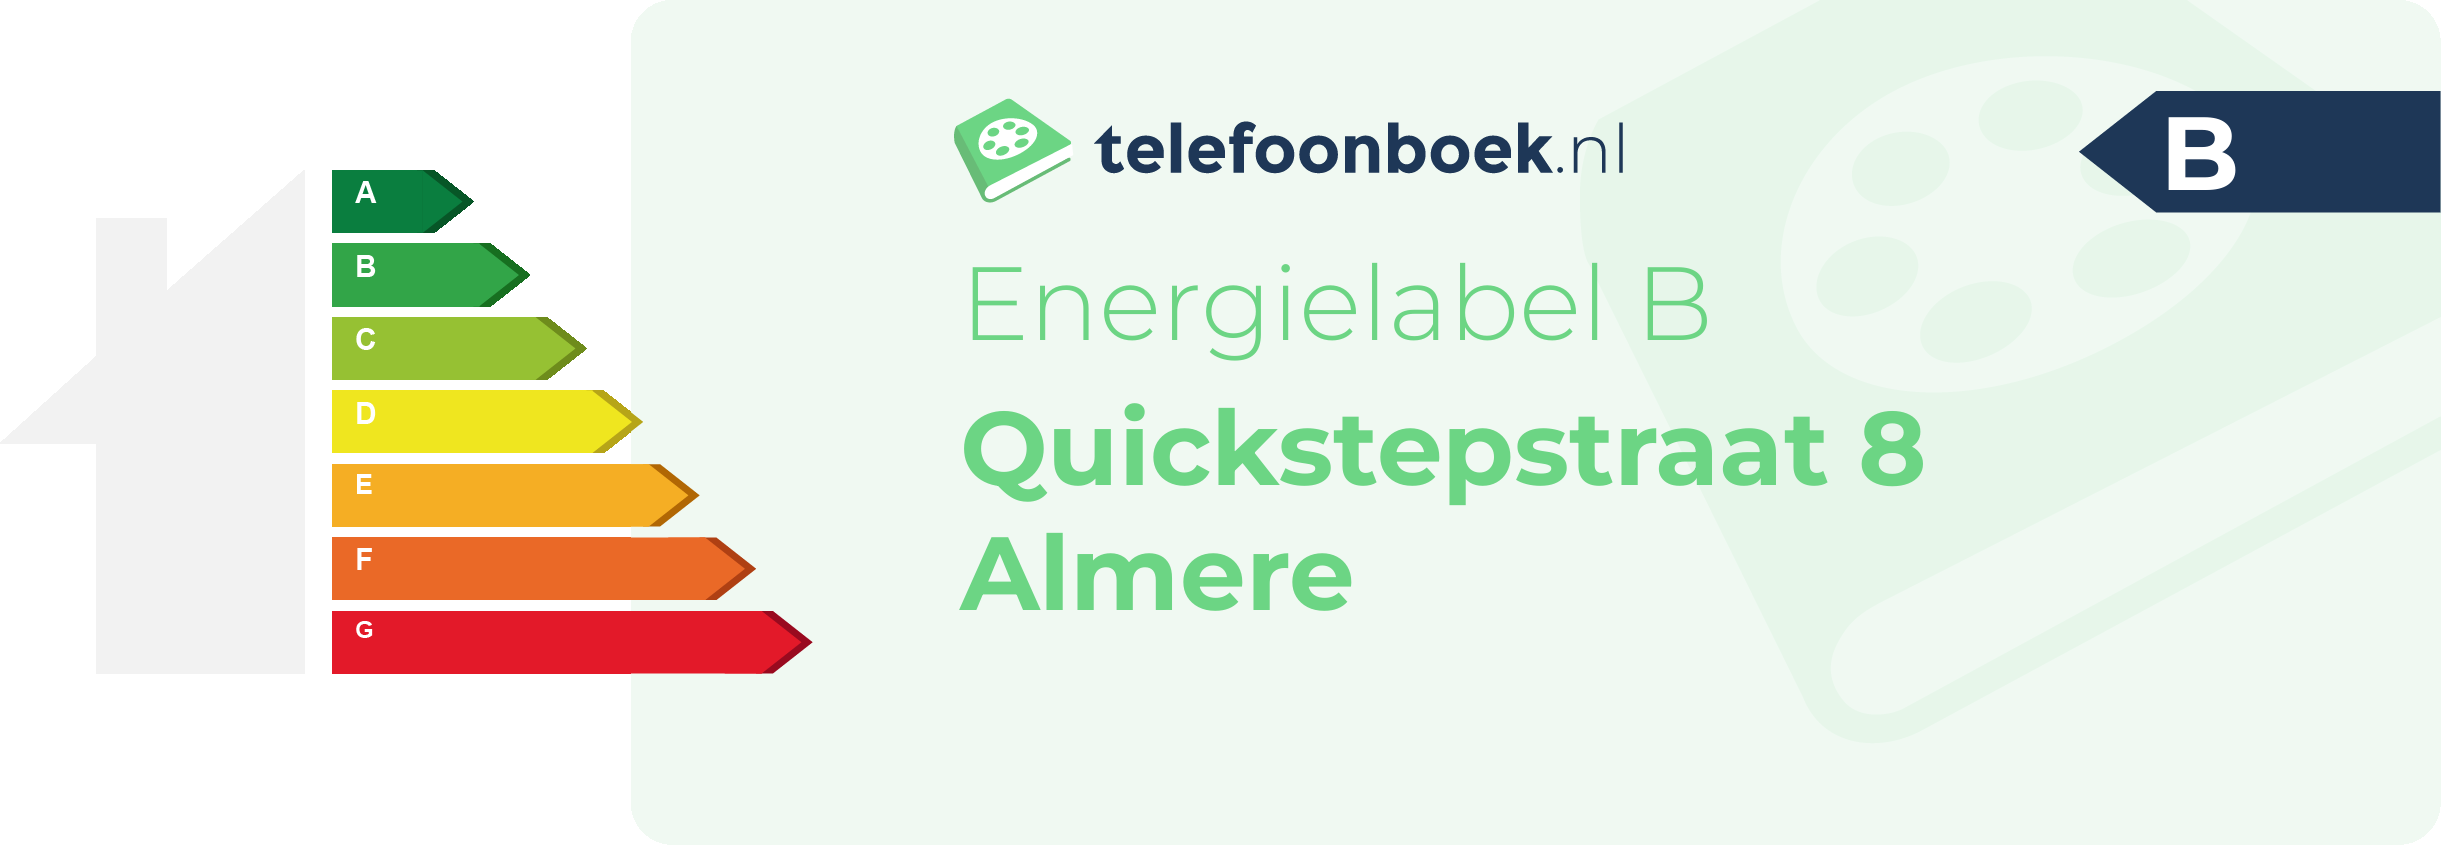 Energielabel Quickstepstraat 8 Almere